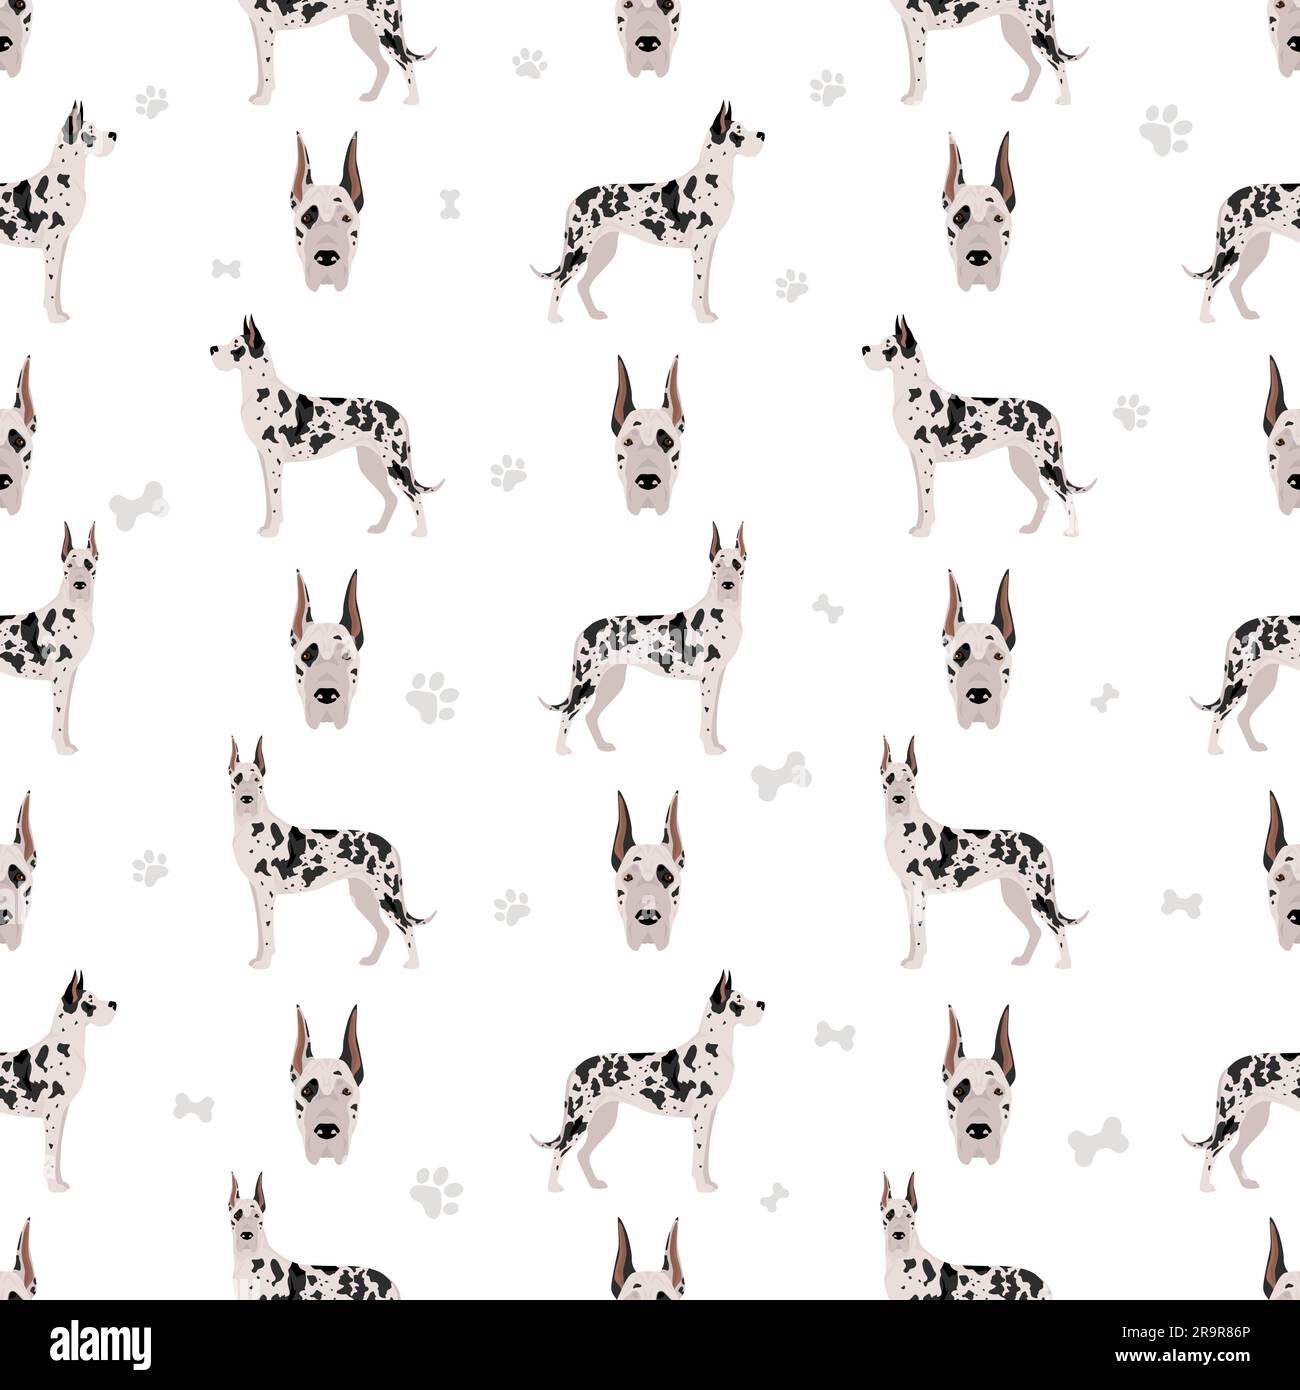 Great dane seamless pattern. Different variaties of coat color dog set.  Vector illustration Stock Vector